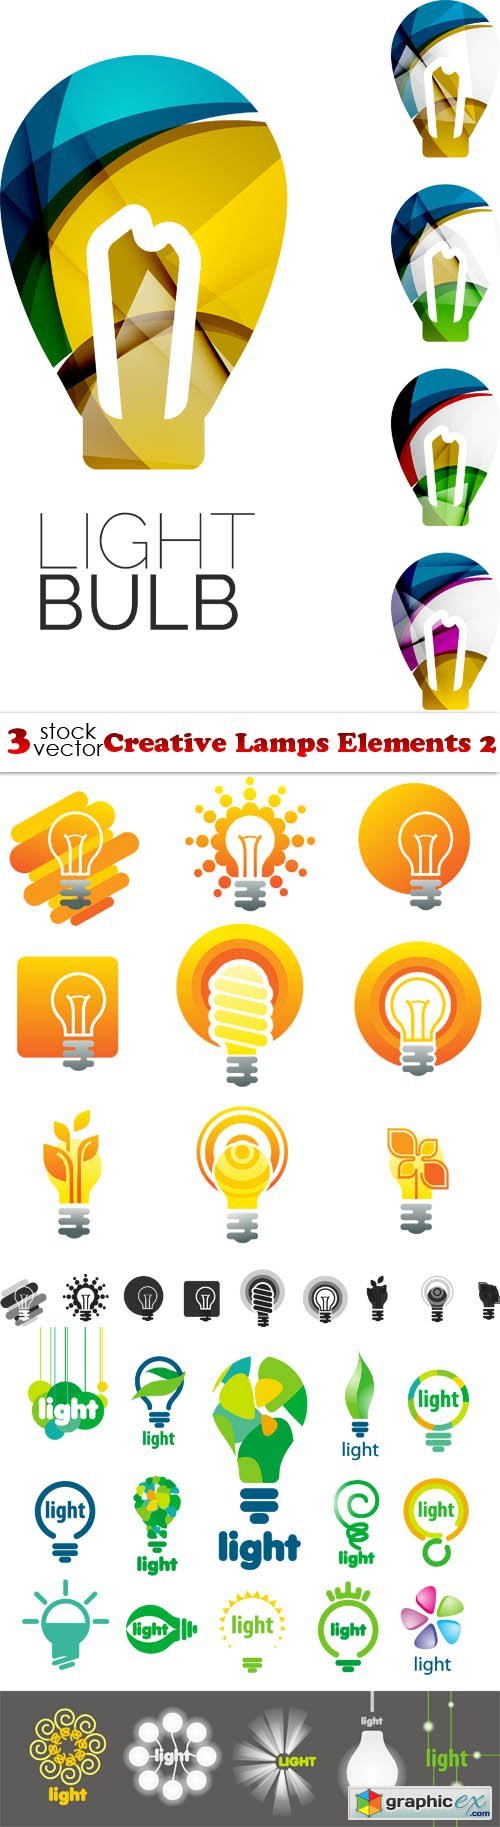 Creative Lamps Elements 2